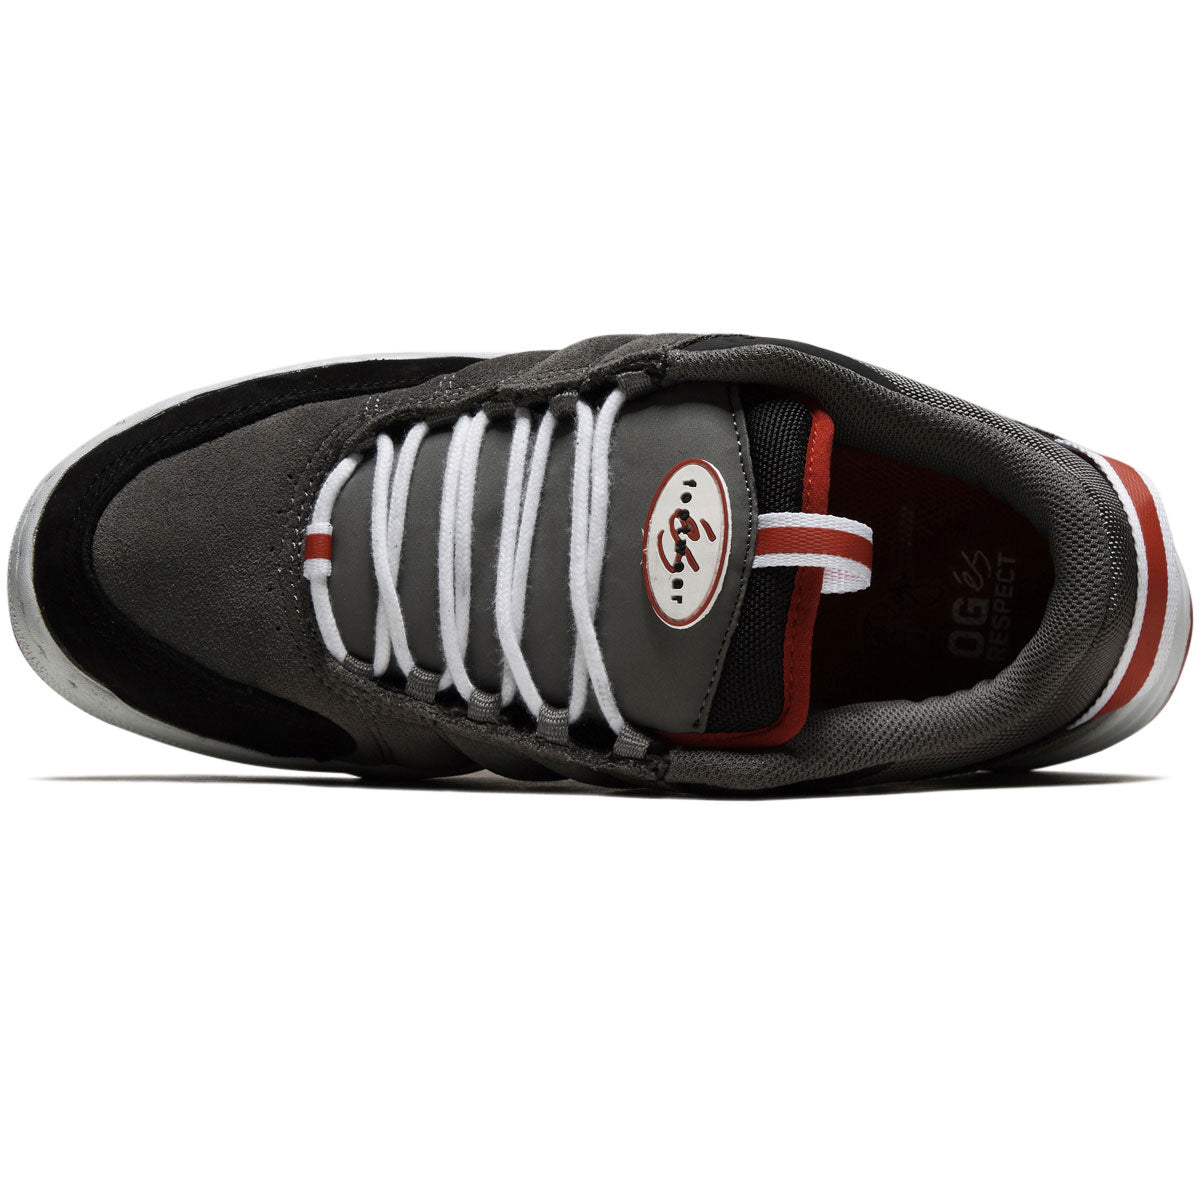 eS Evant Shoes - Grey/Black/Red image 3